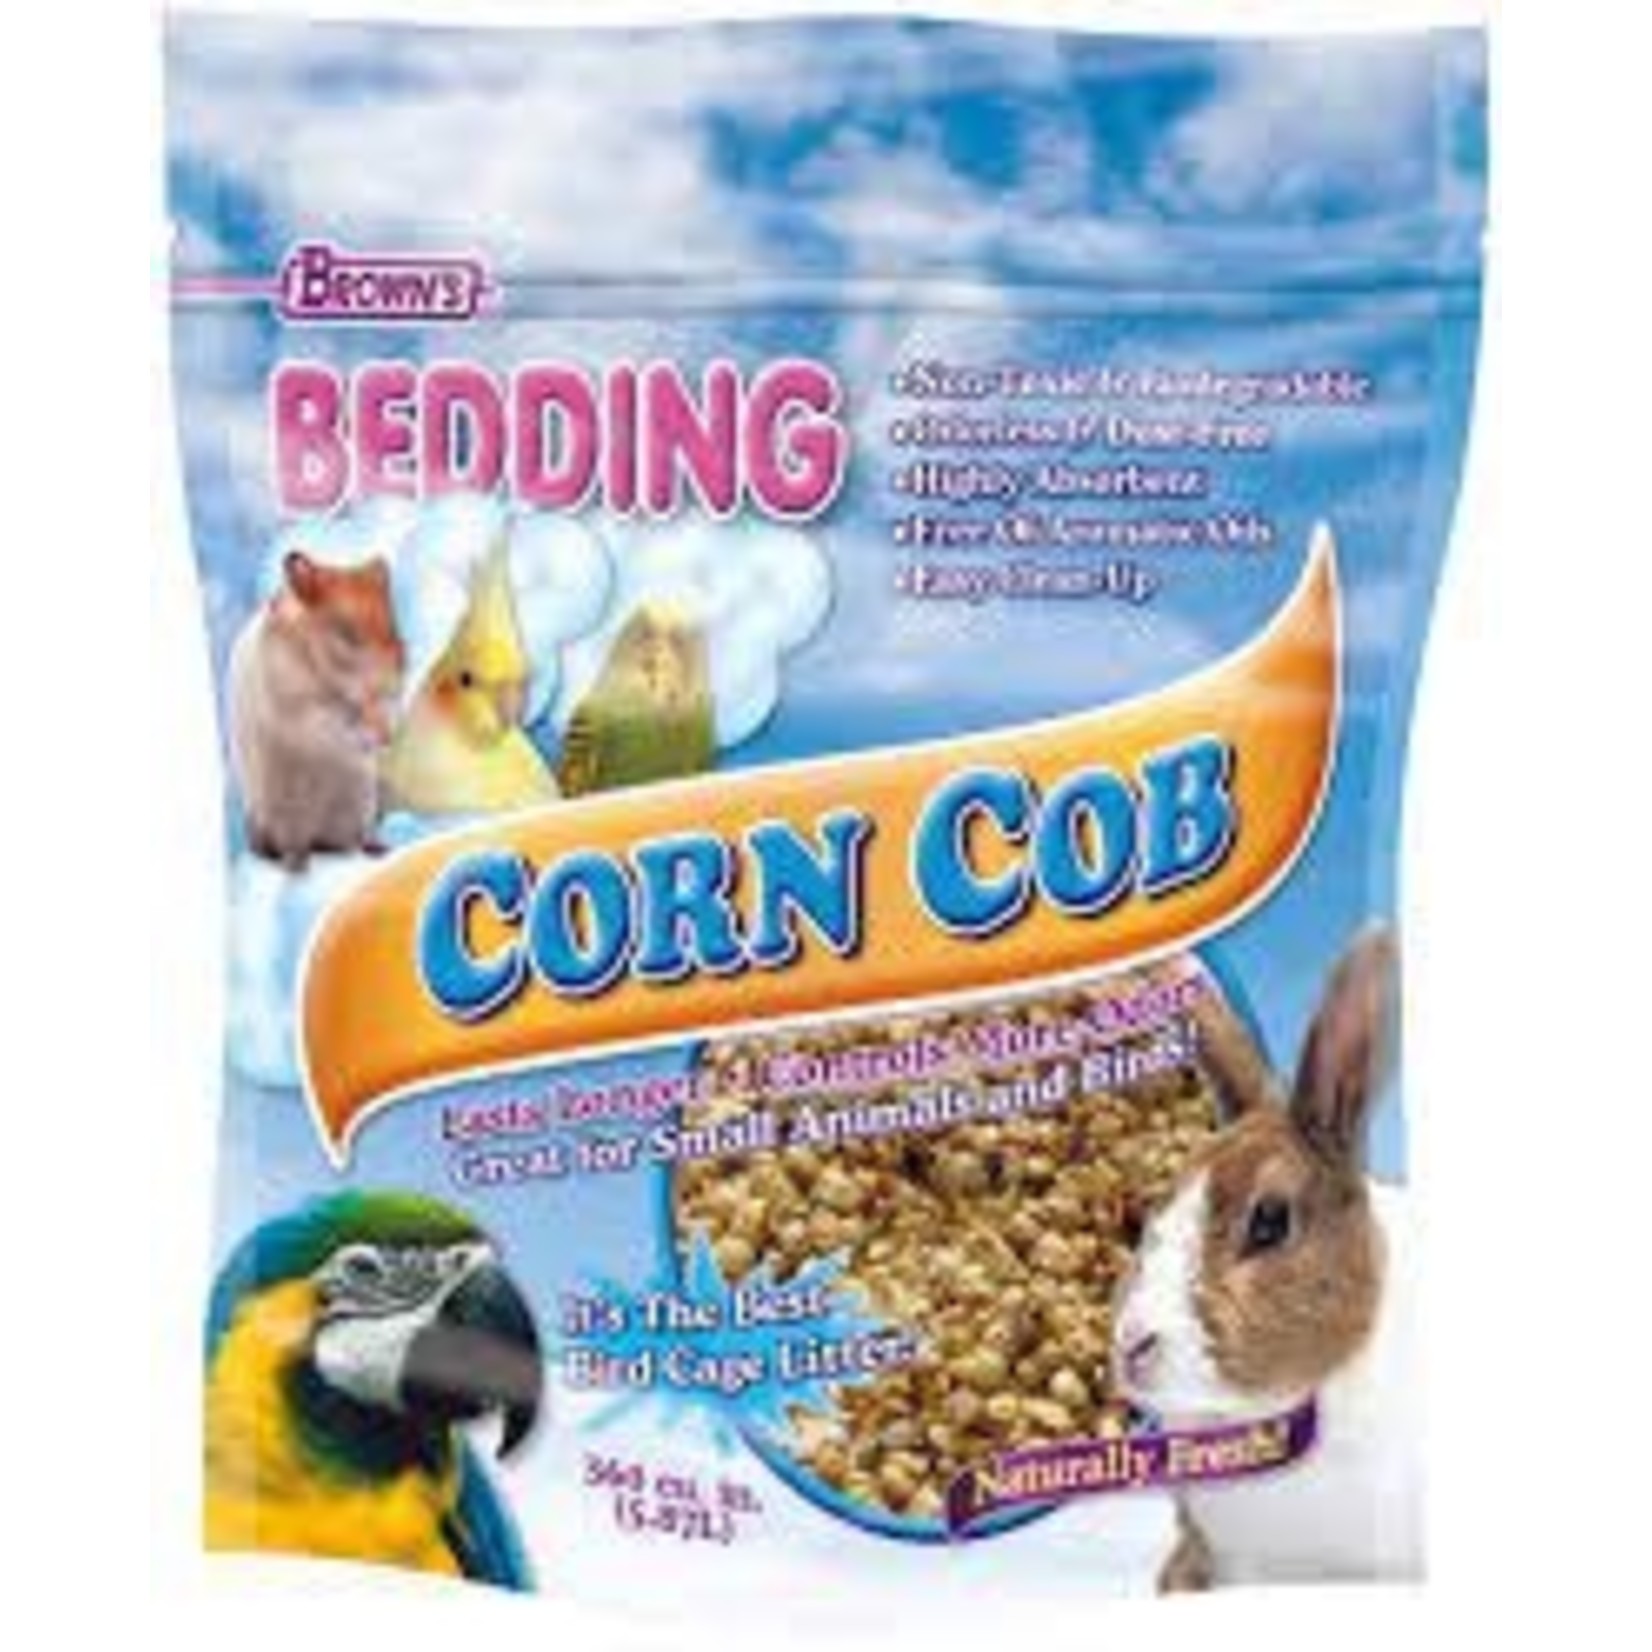 Brown's Bedding Corn Cob 5#